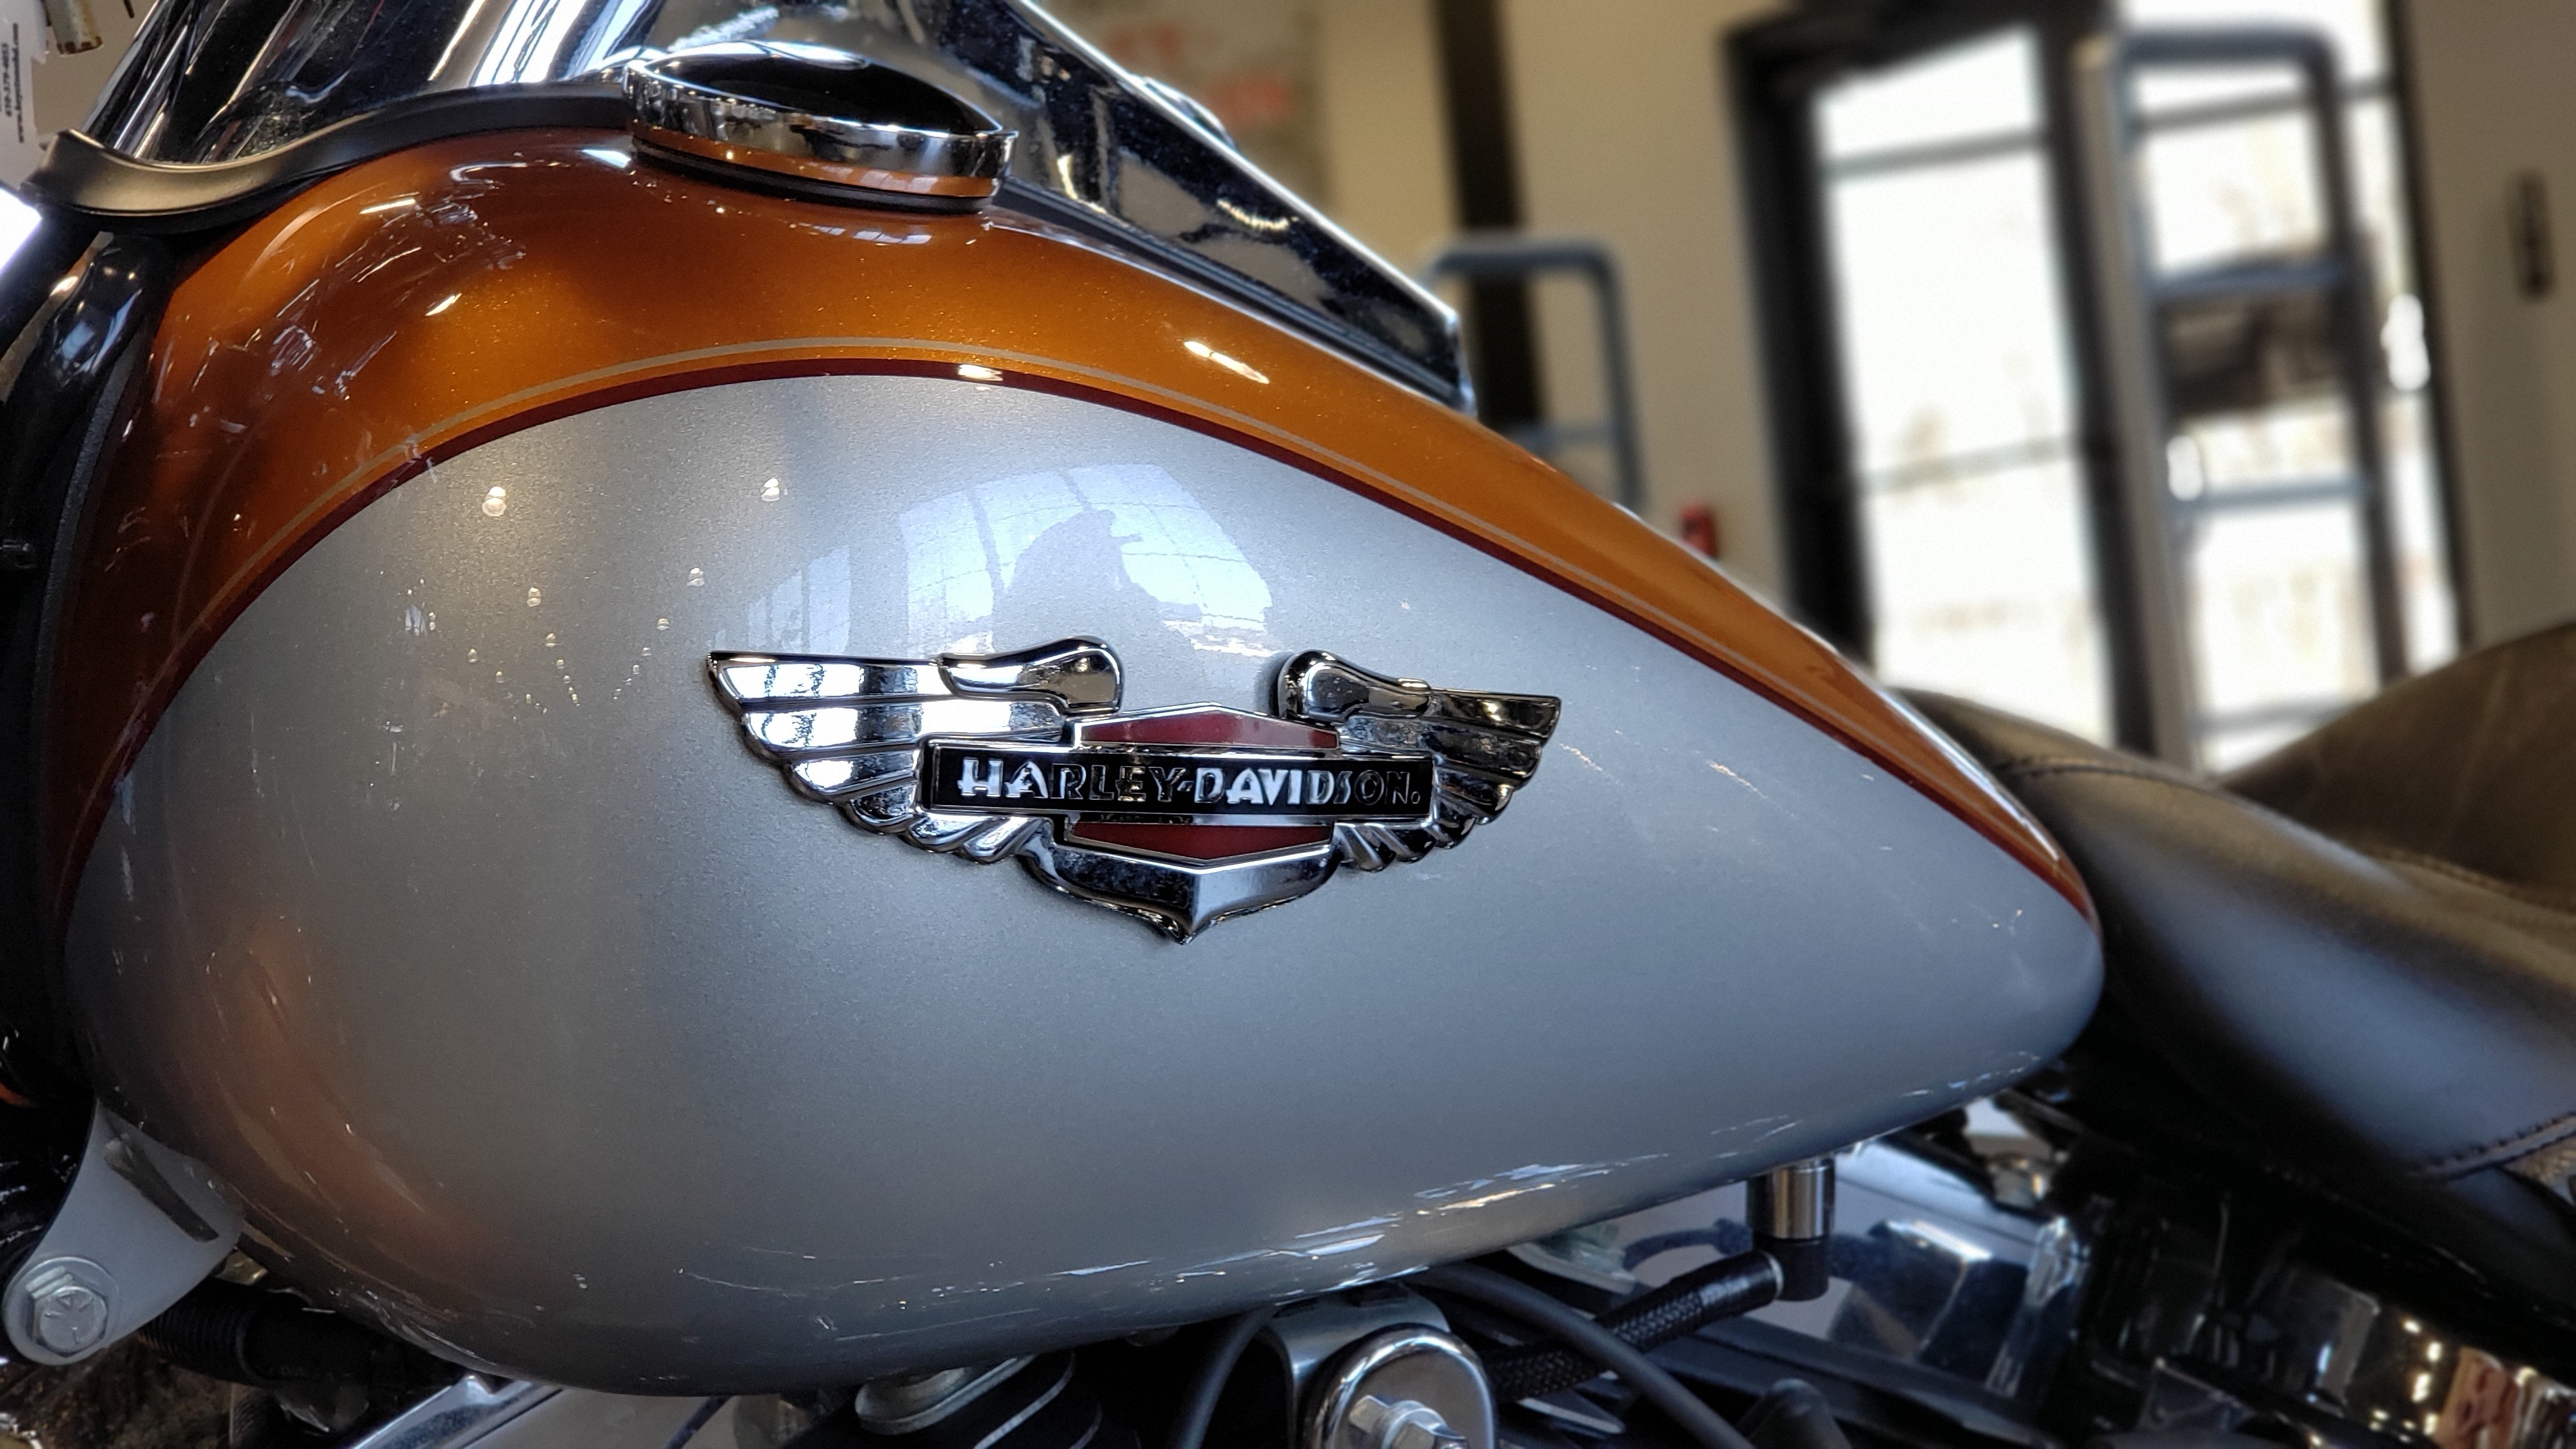 2014 Harley-Davidson Softail Deluxe at Keystone Harley-Davidson